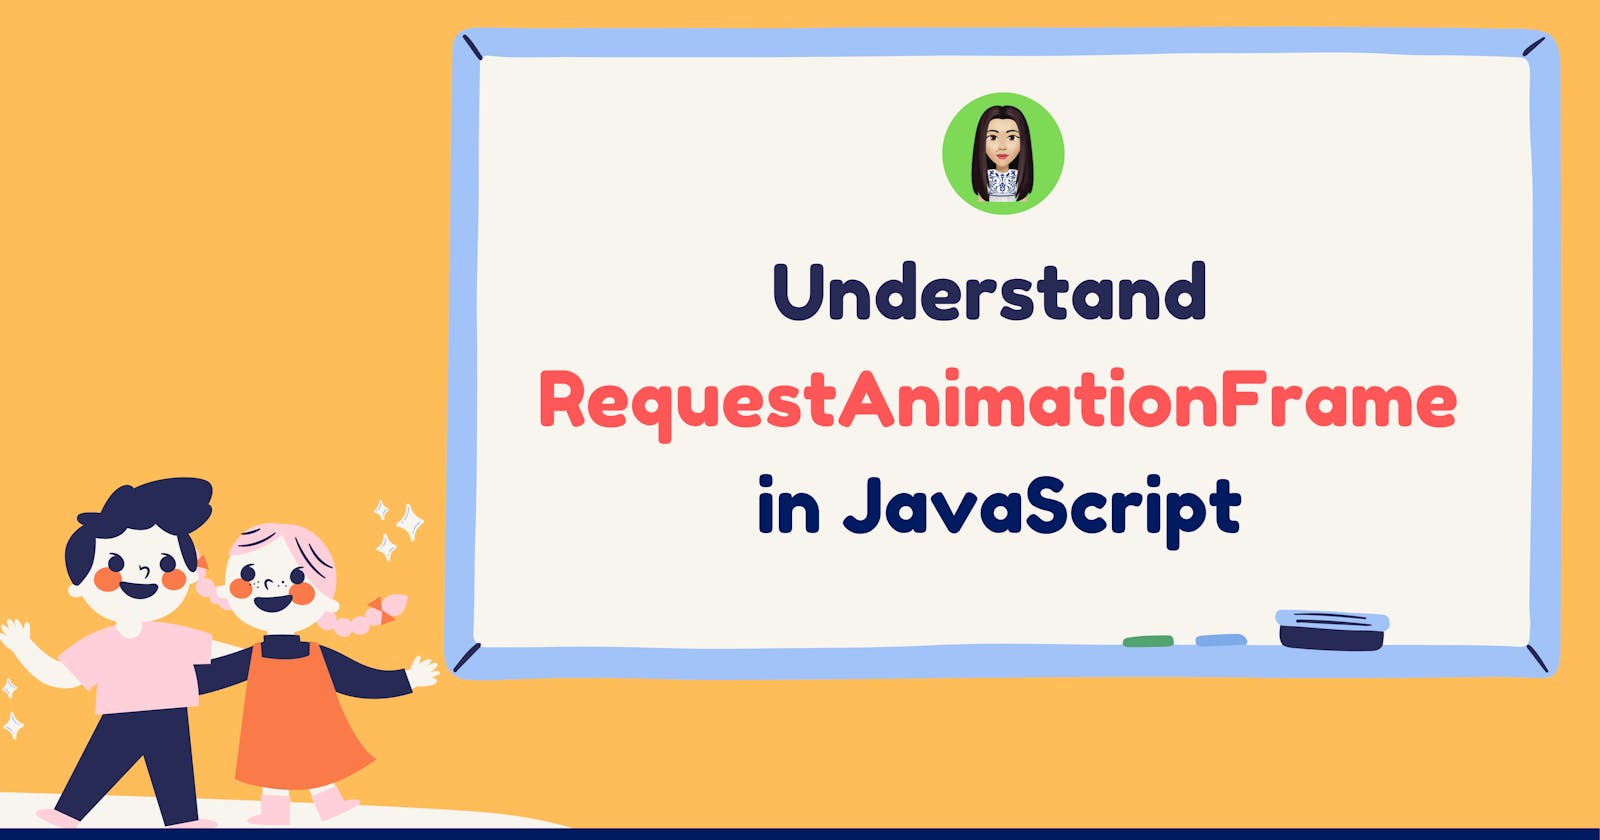 RequestAnimationFrame in JavaScript